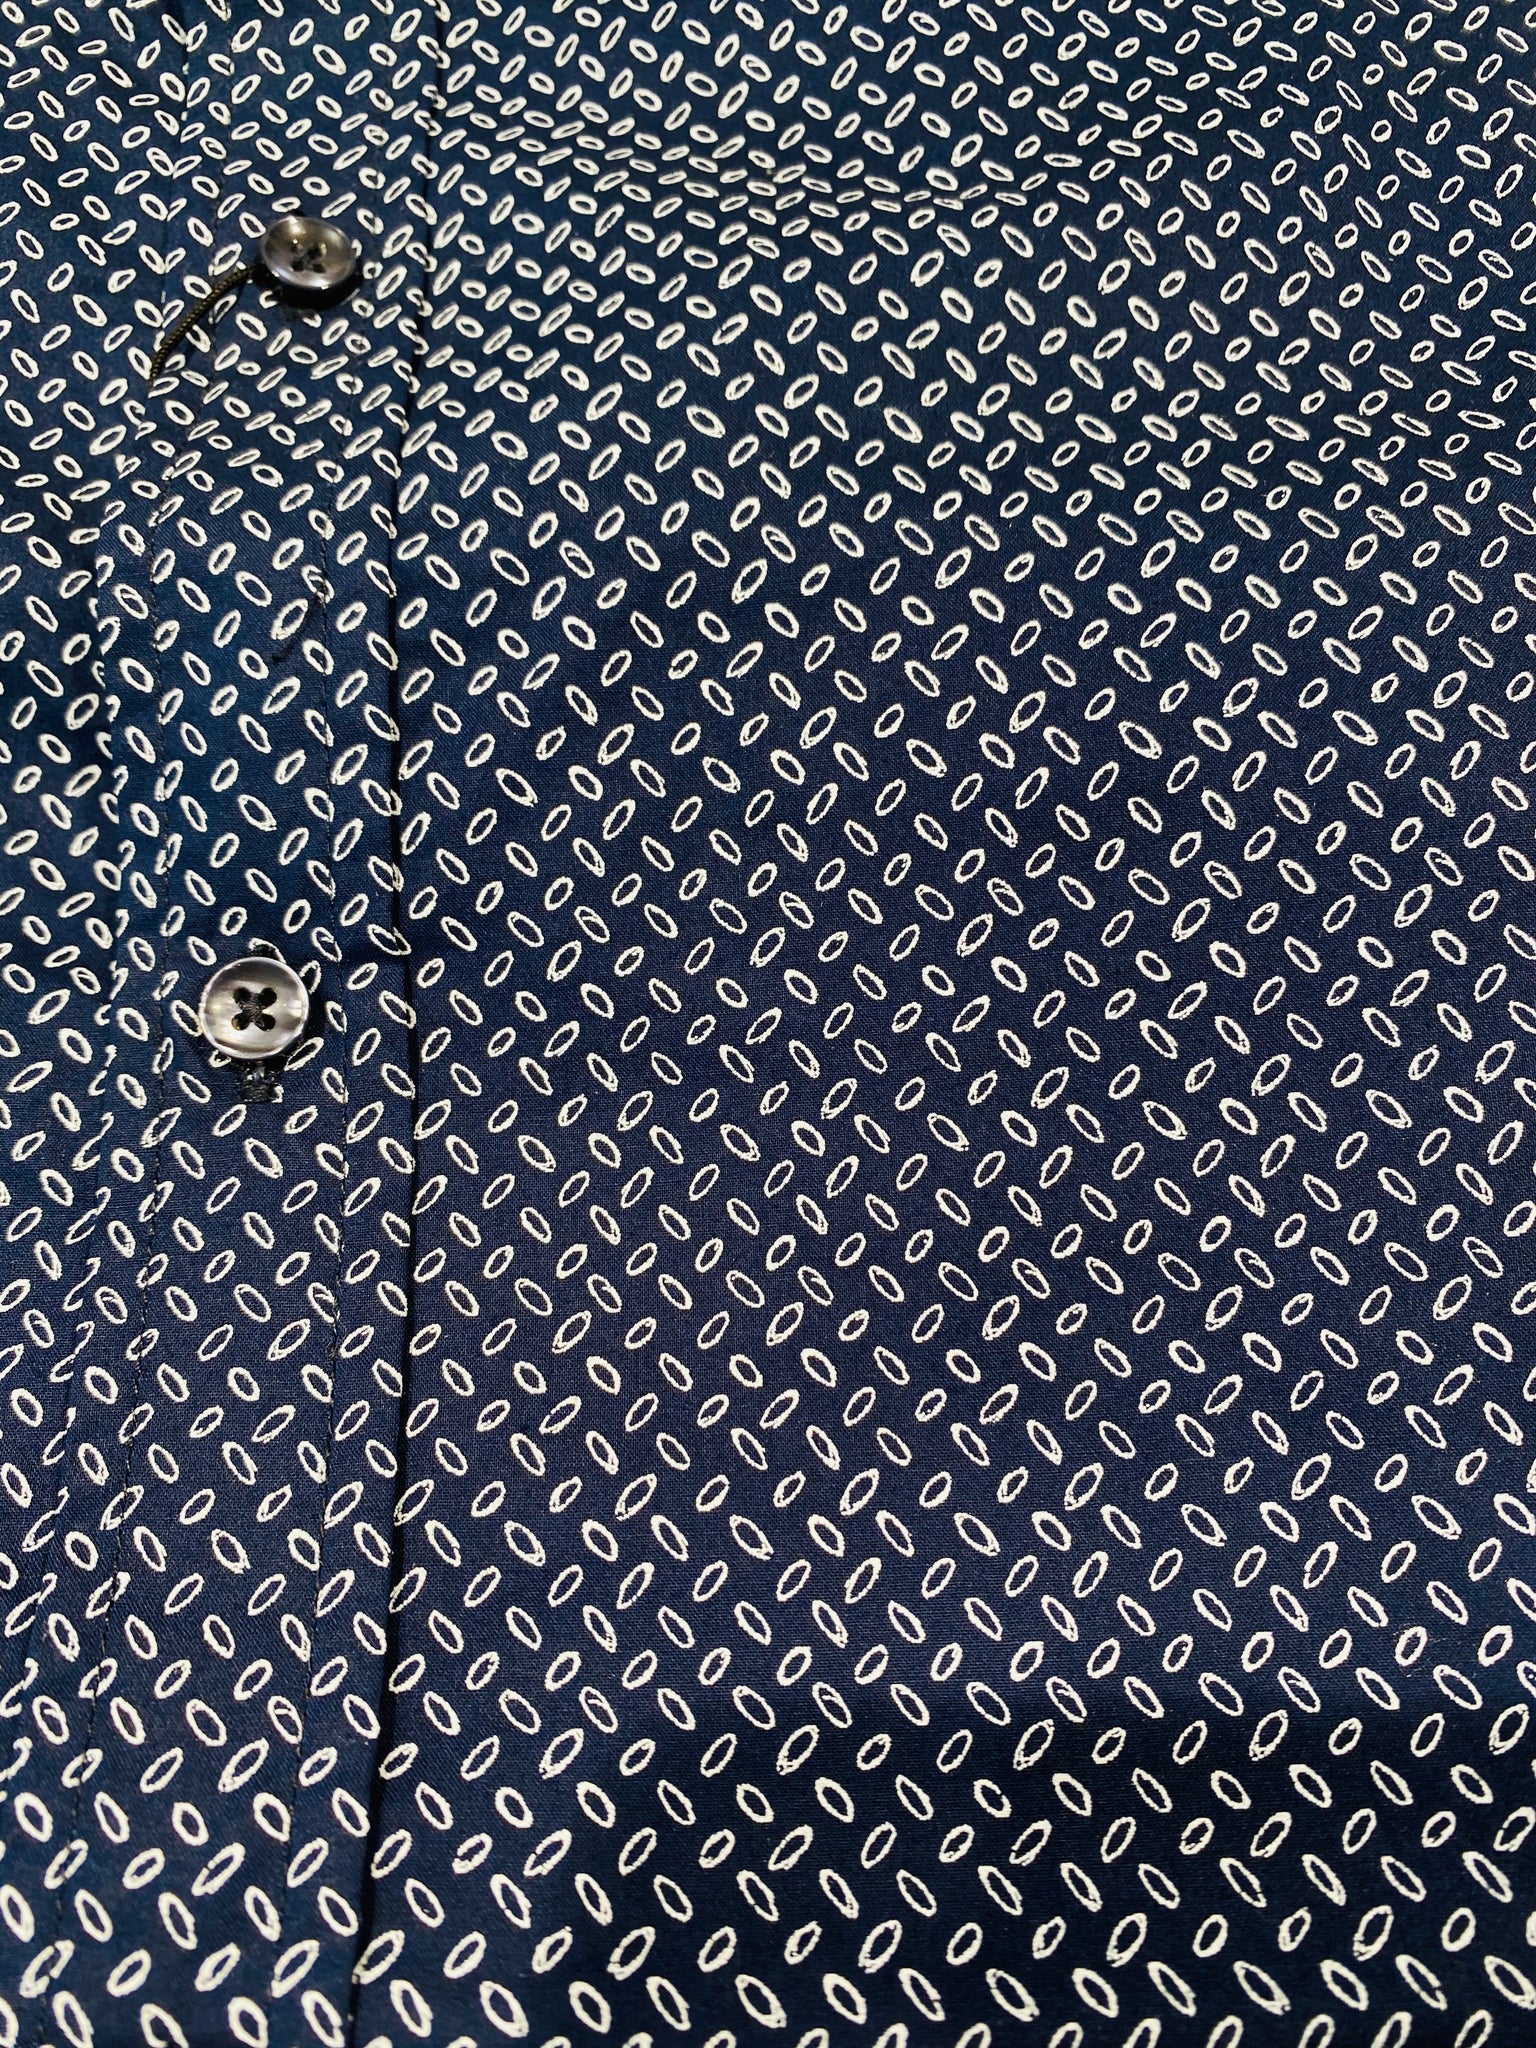 Antony Morato Slim-Fit-Hemd dunkelblau gemustert mit Stehkragen